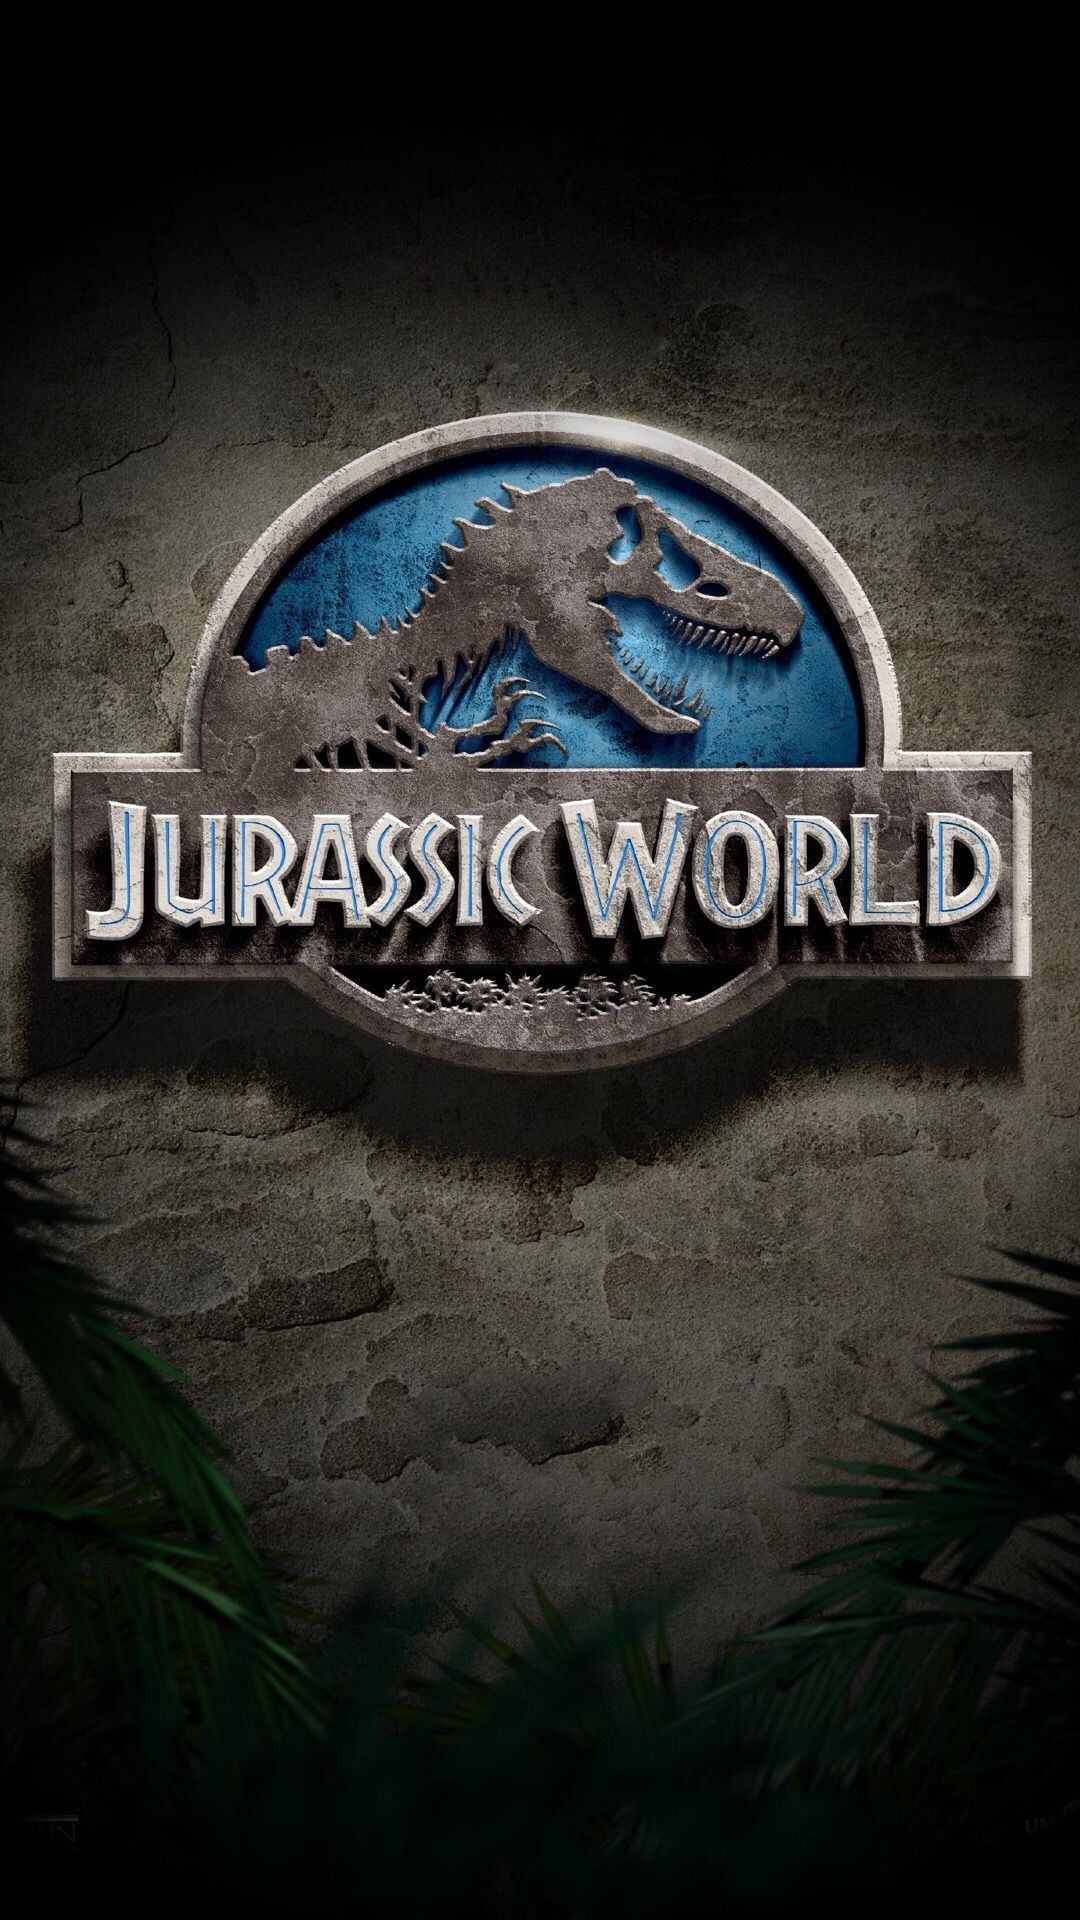 Jurassic World Android Background. Jurassic world